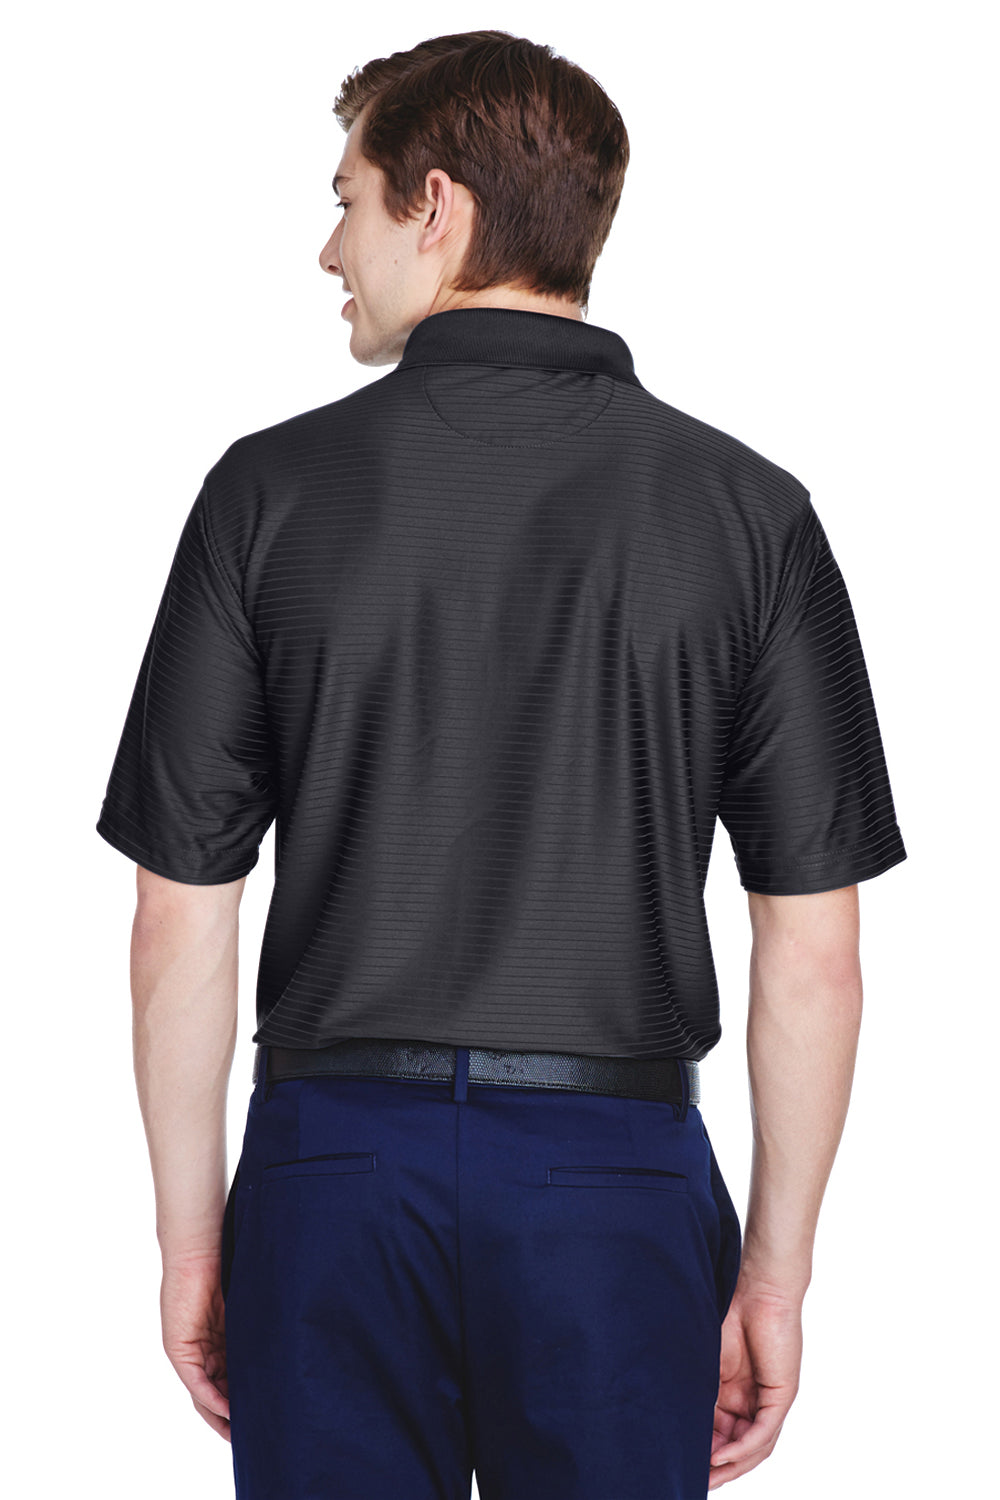 UltraClub 8413 Mens Cool & Dry Elite Performance Moisture Wicking Short Sleeve Polo Shirt Black Back